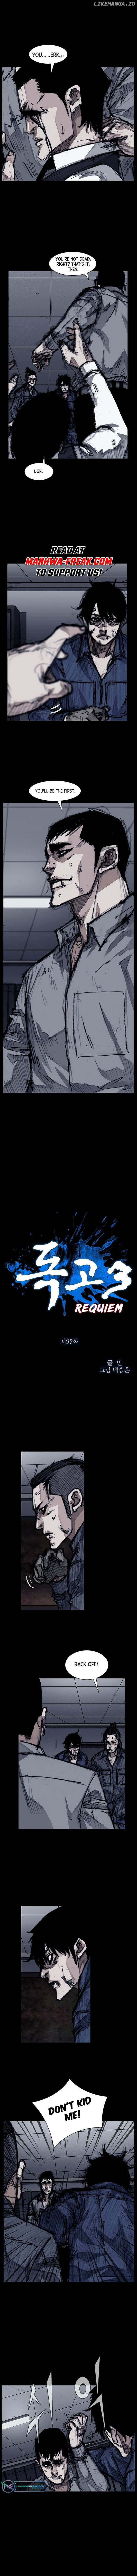 Dokgo 3: Requiem - Page 1